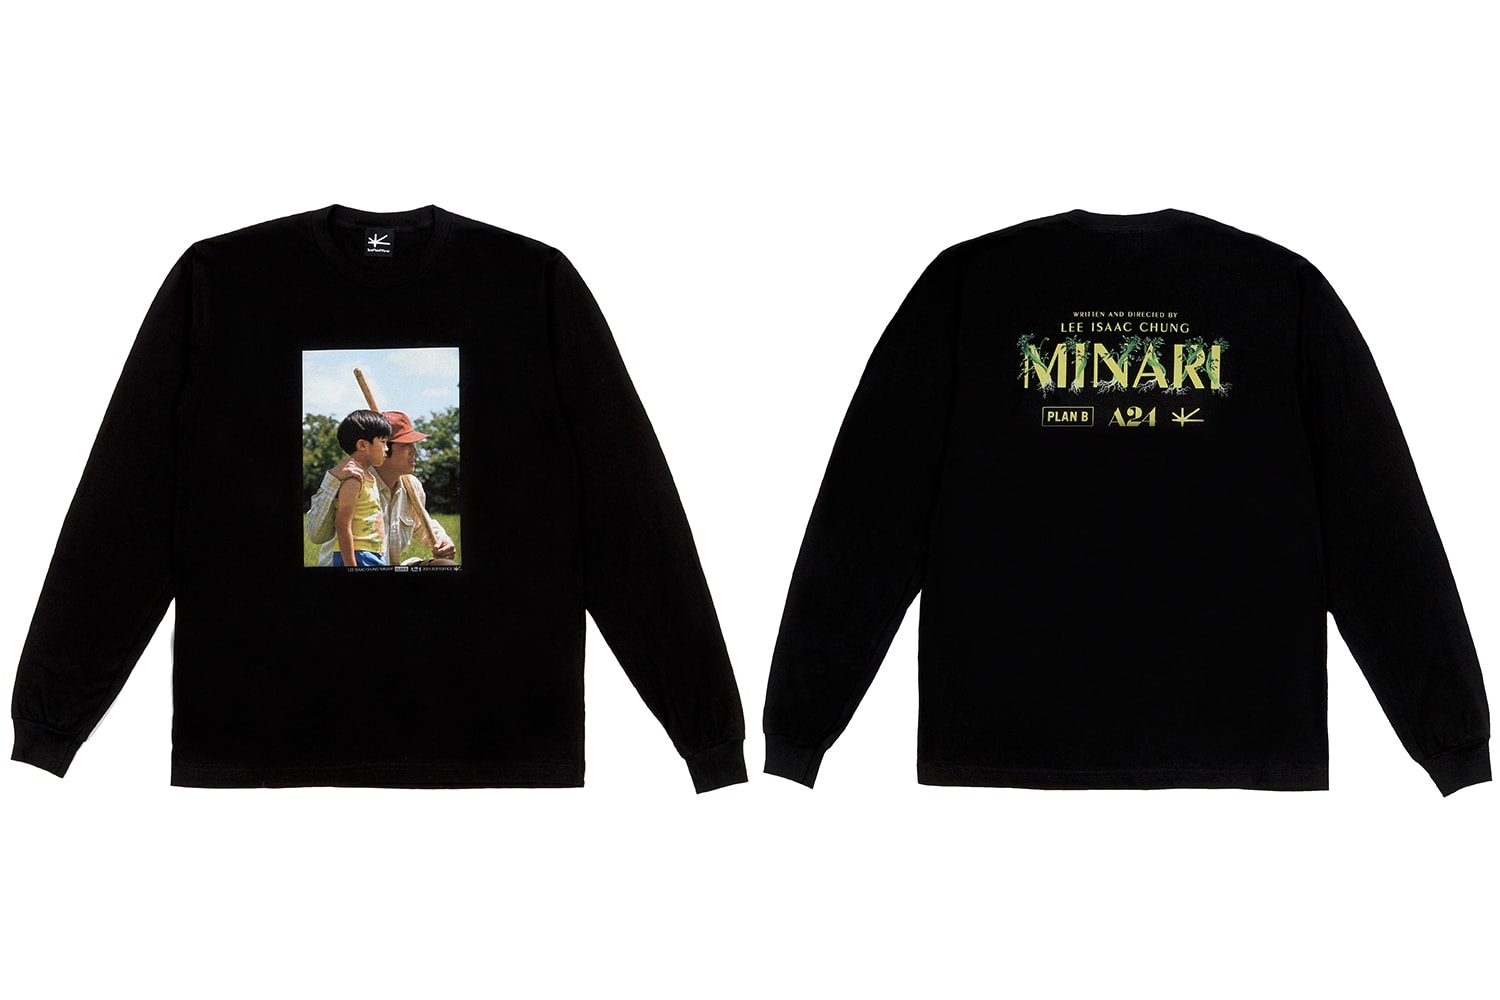 A24 Softoffice Minari Merch South Korea Info Art Fashion Community Plan B Entertainment Pancinema t shirt Buy Price Golden Globes Asian Hate Steven Yeun